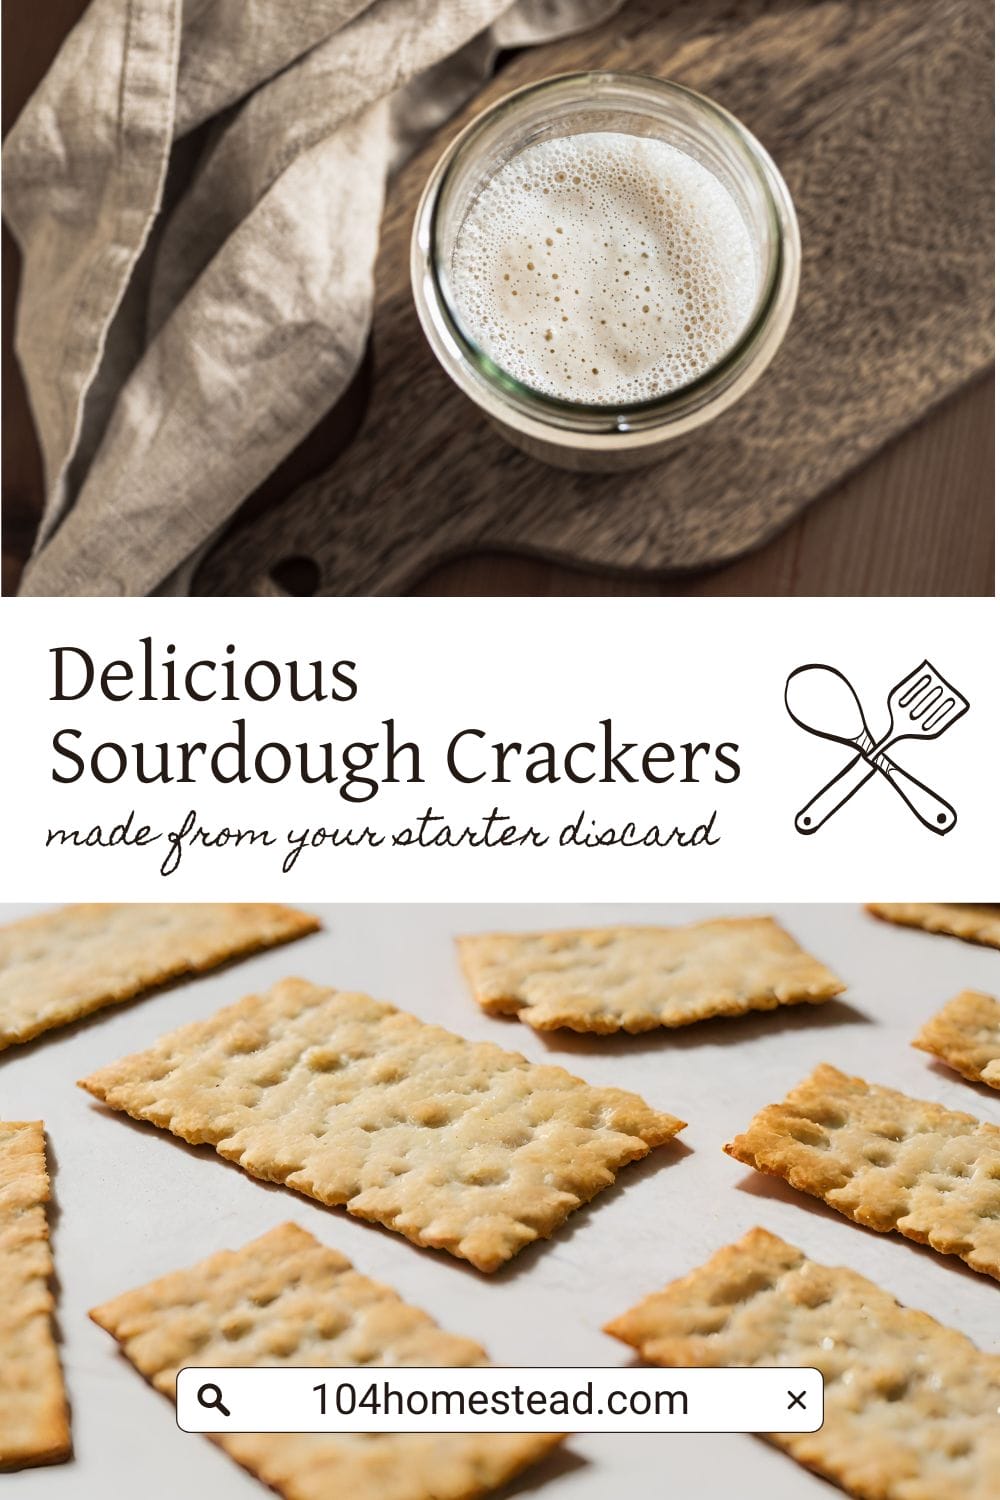 A Pinterest-friendly graphic for my homemade sourdough cracker recipe that uses sourdough discard.